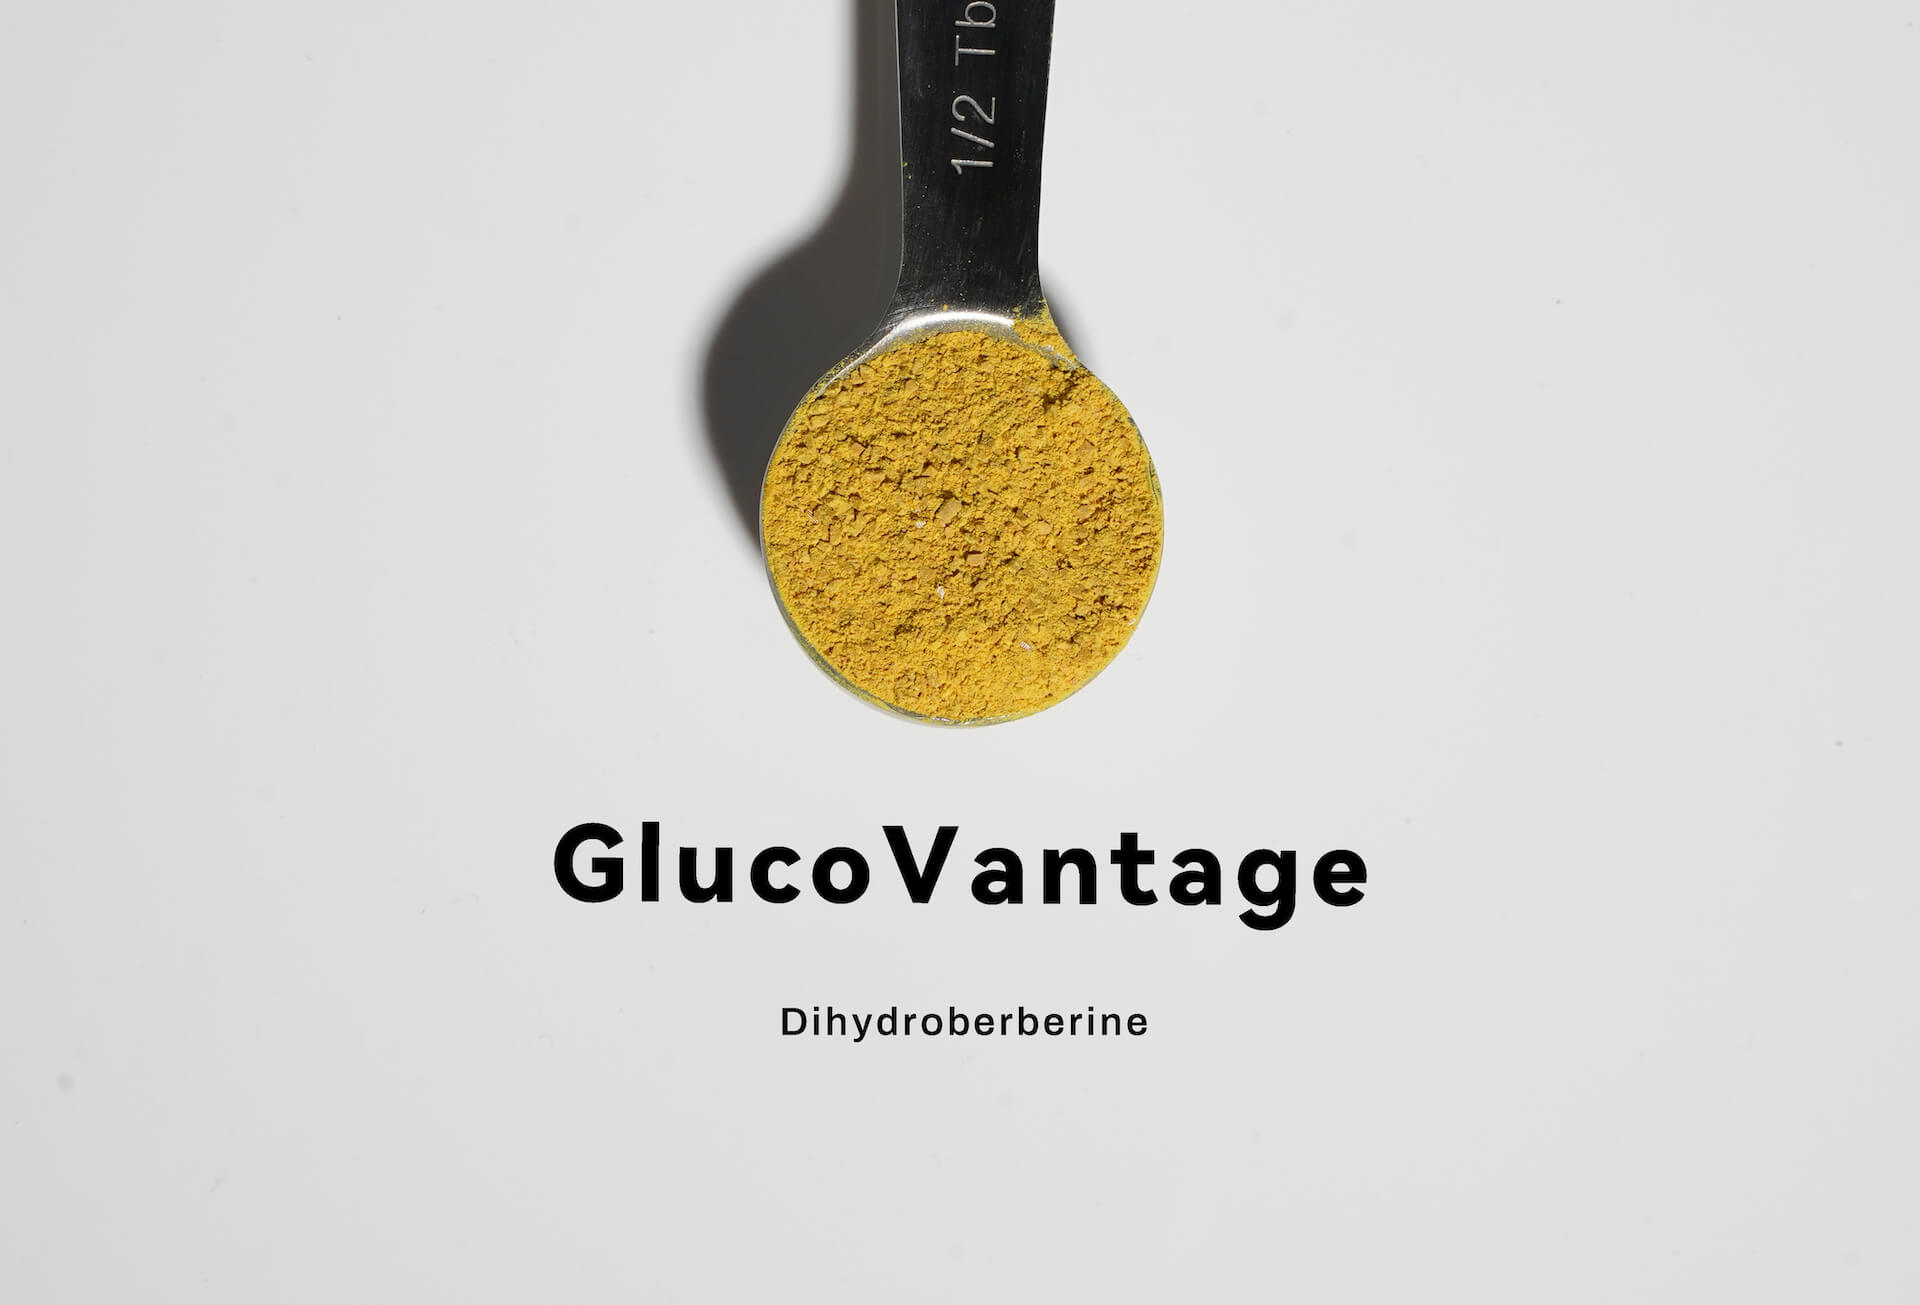 GlucoVantage - Ingredient Description